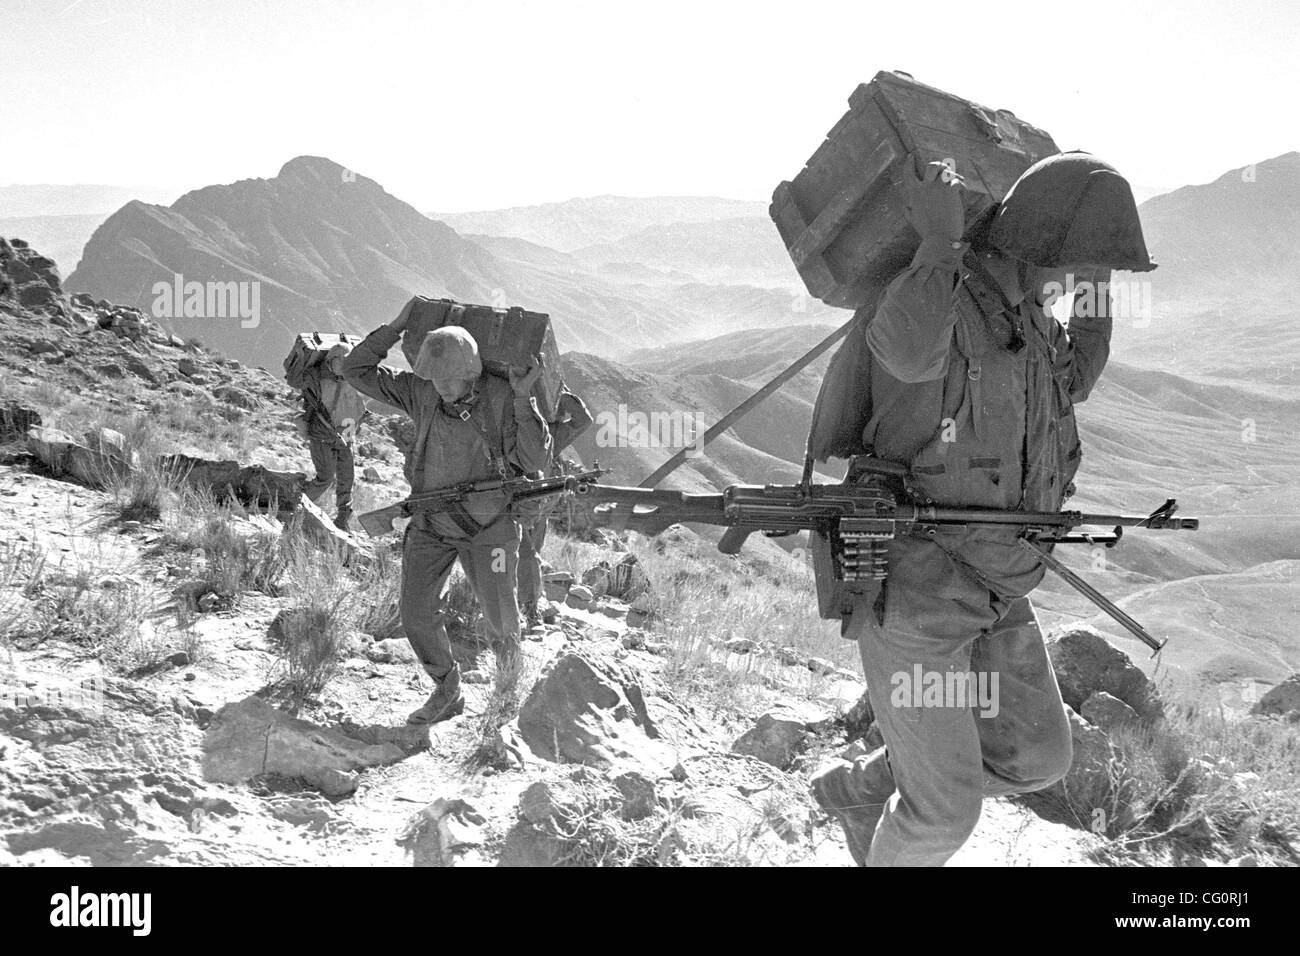 Soviet Afghanistan war - Page 6 Jul-12-2007-kabul-afghanistan-the-soviet-war-in-afghanistan-was-a-CG0RJ1